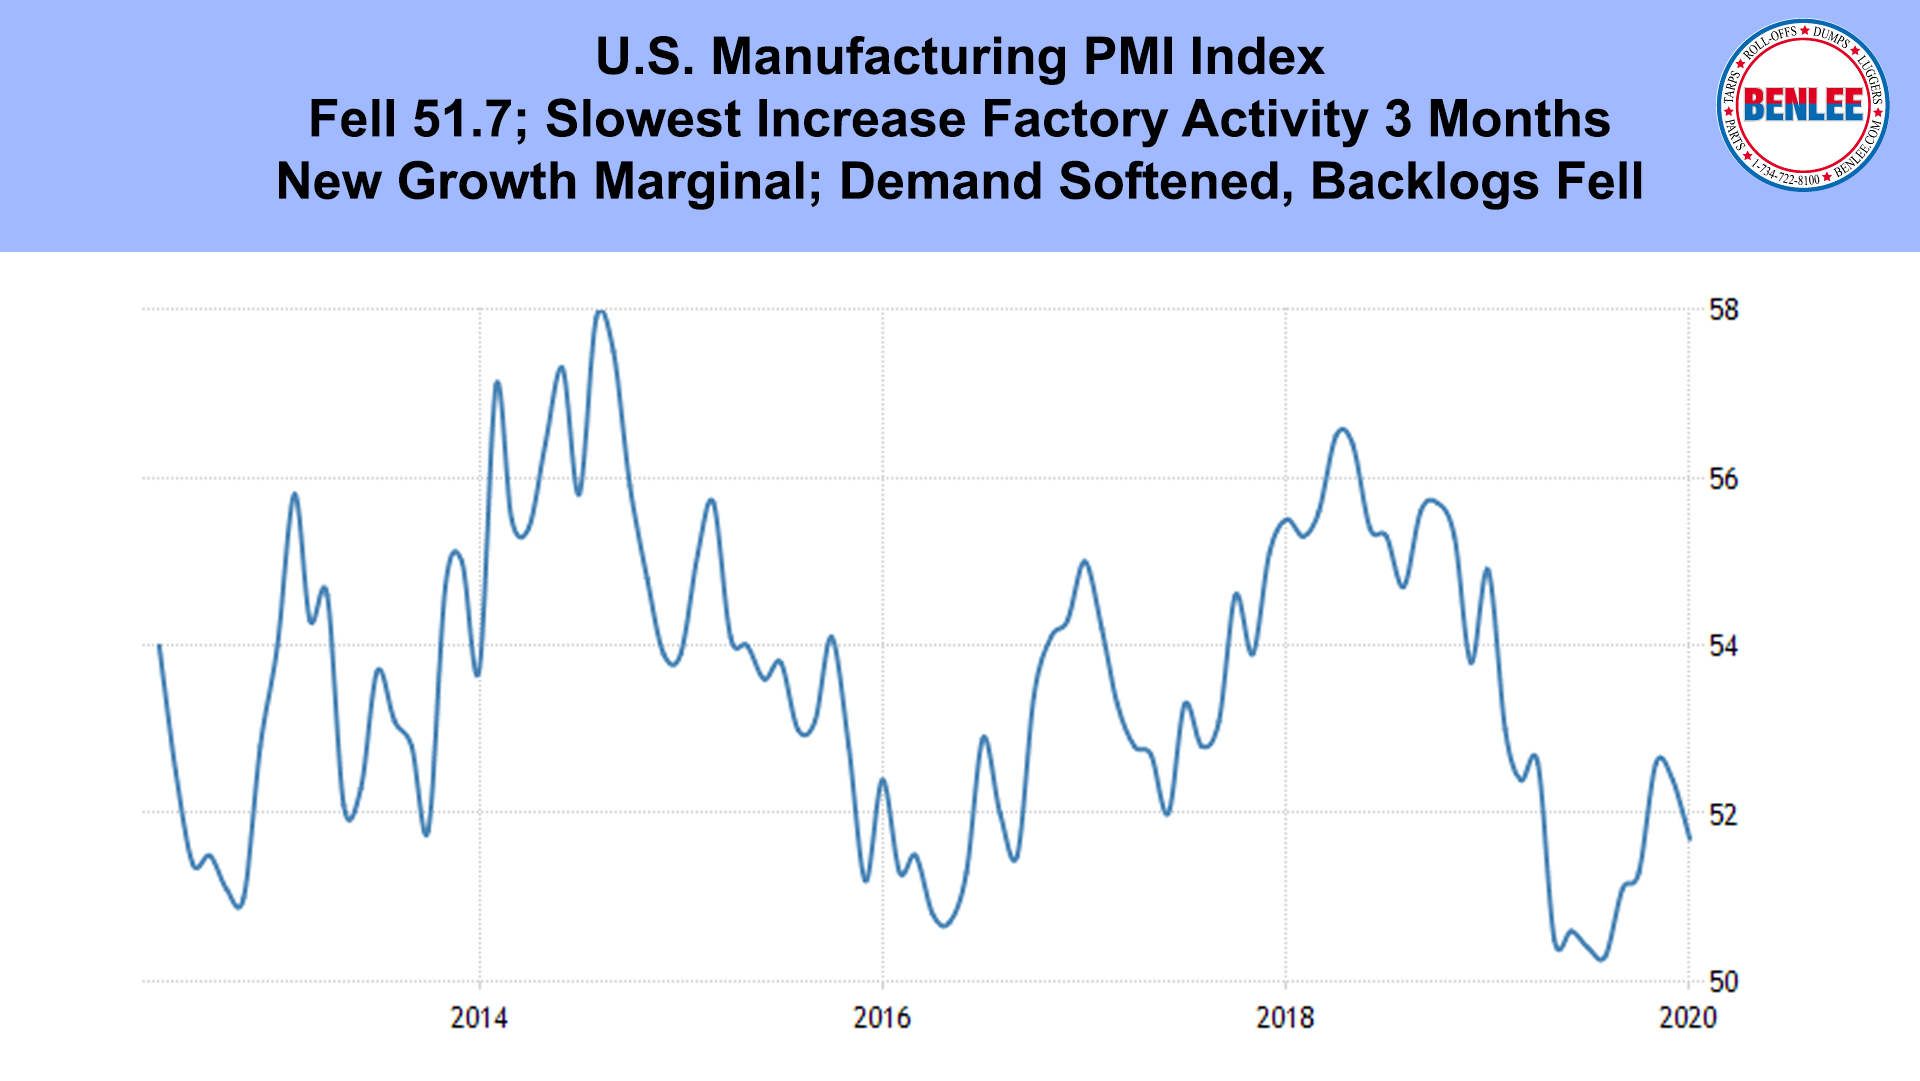 U.S. Manufacturing PMI IndexC